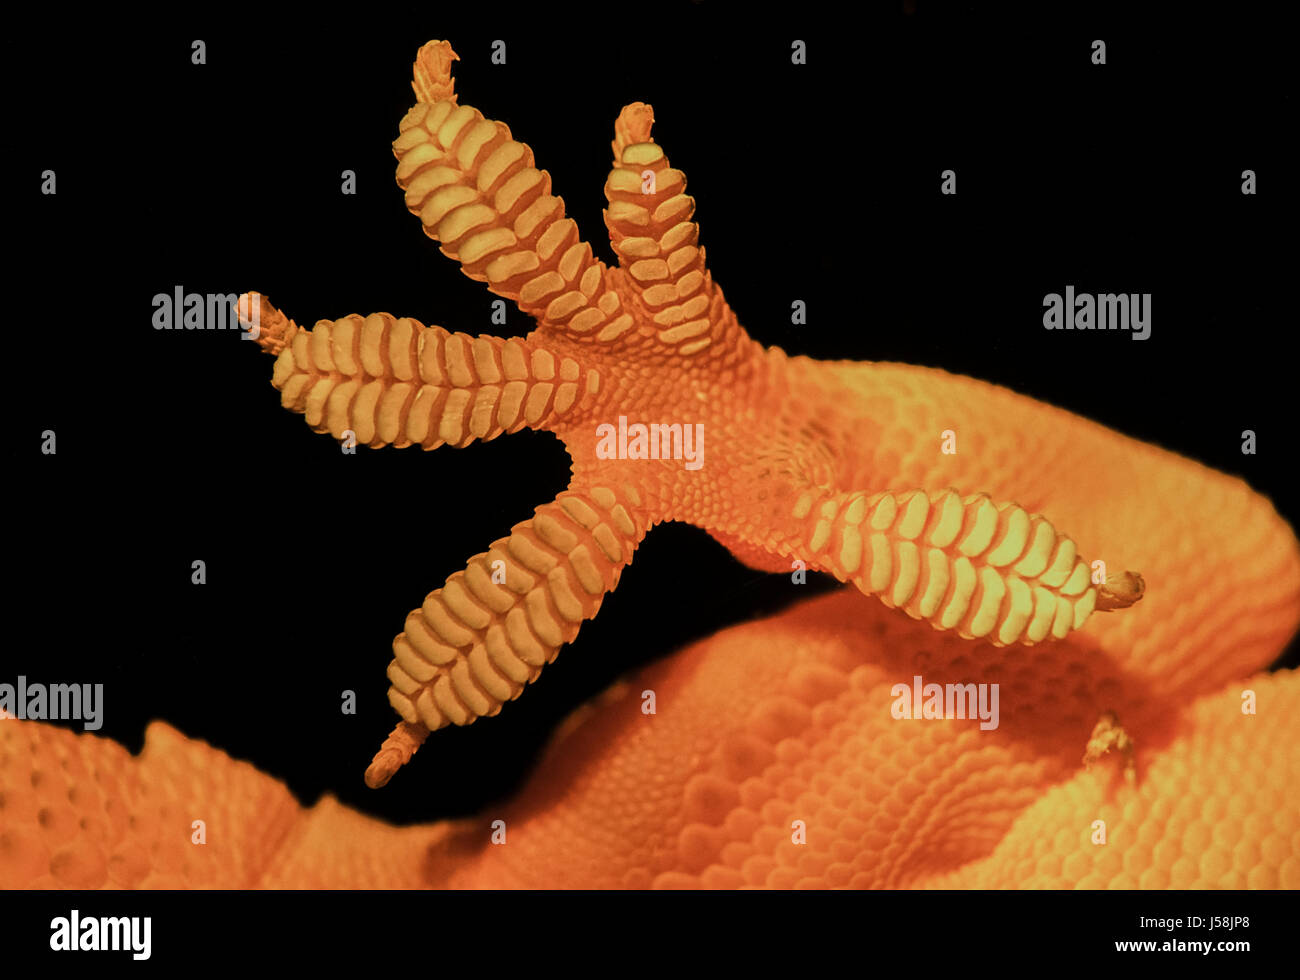 Dettaglio del piede Gecko e le dita dei piedi, Hemidactylus frenatus, sul vetro, Rajasthan, India Foto Stock